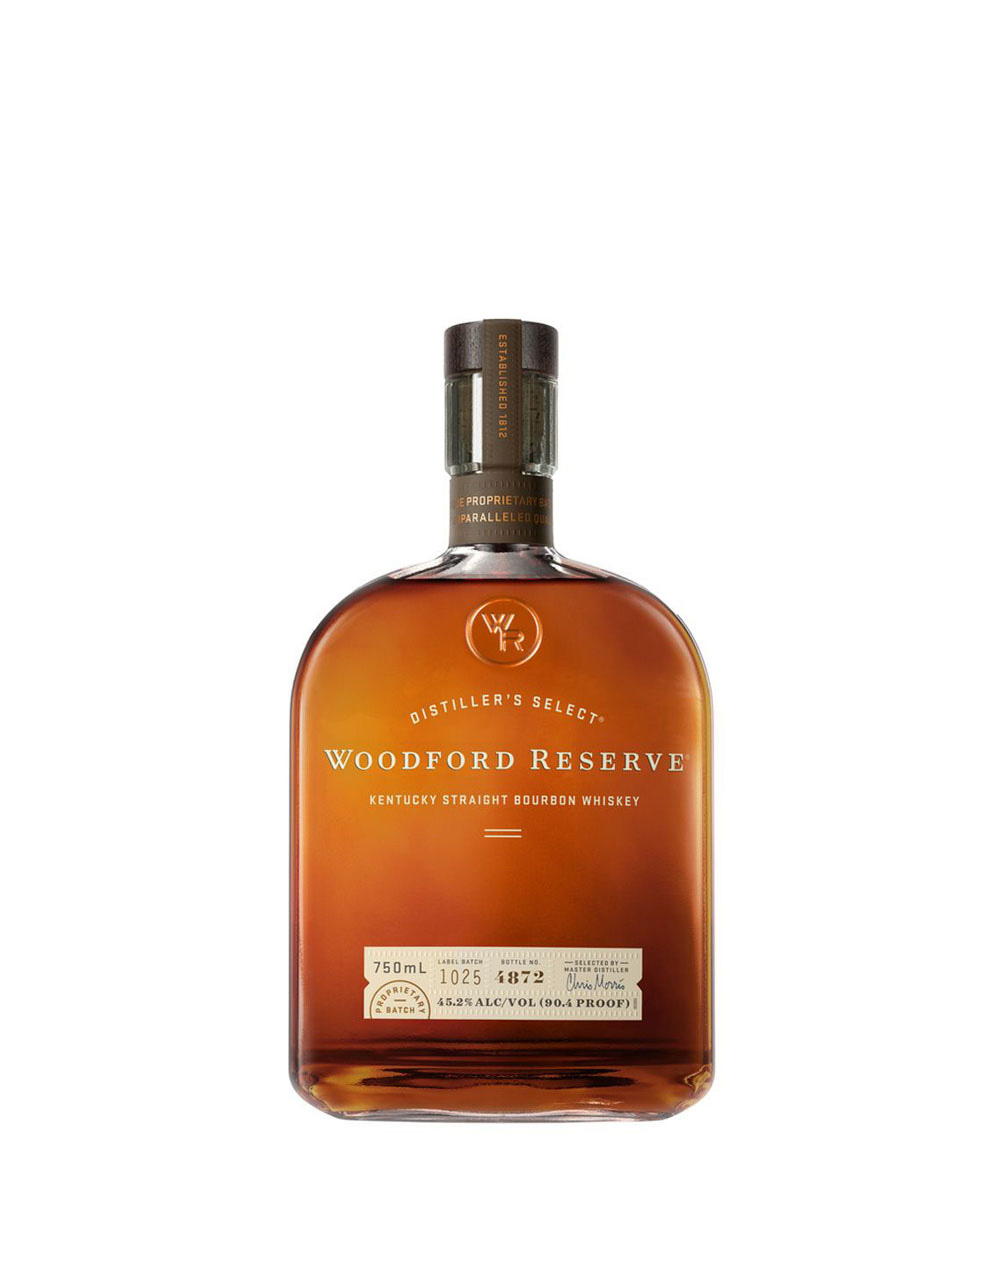 Woodford Reserve: Distinctive Bourbon